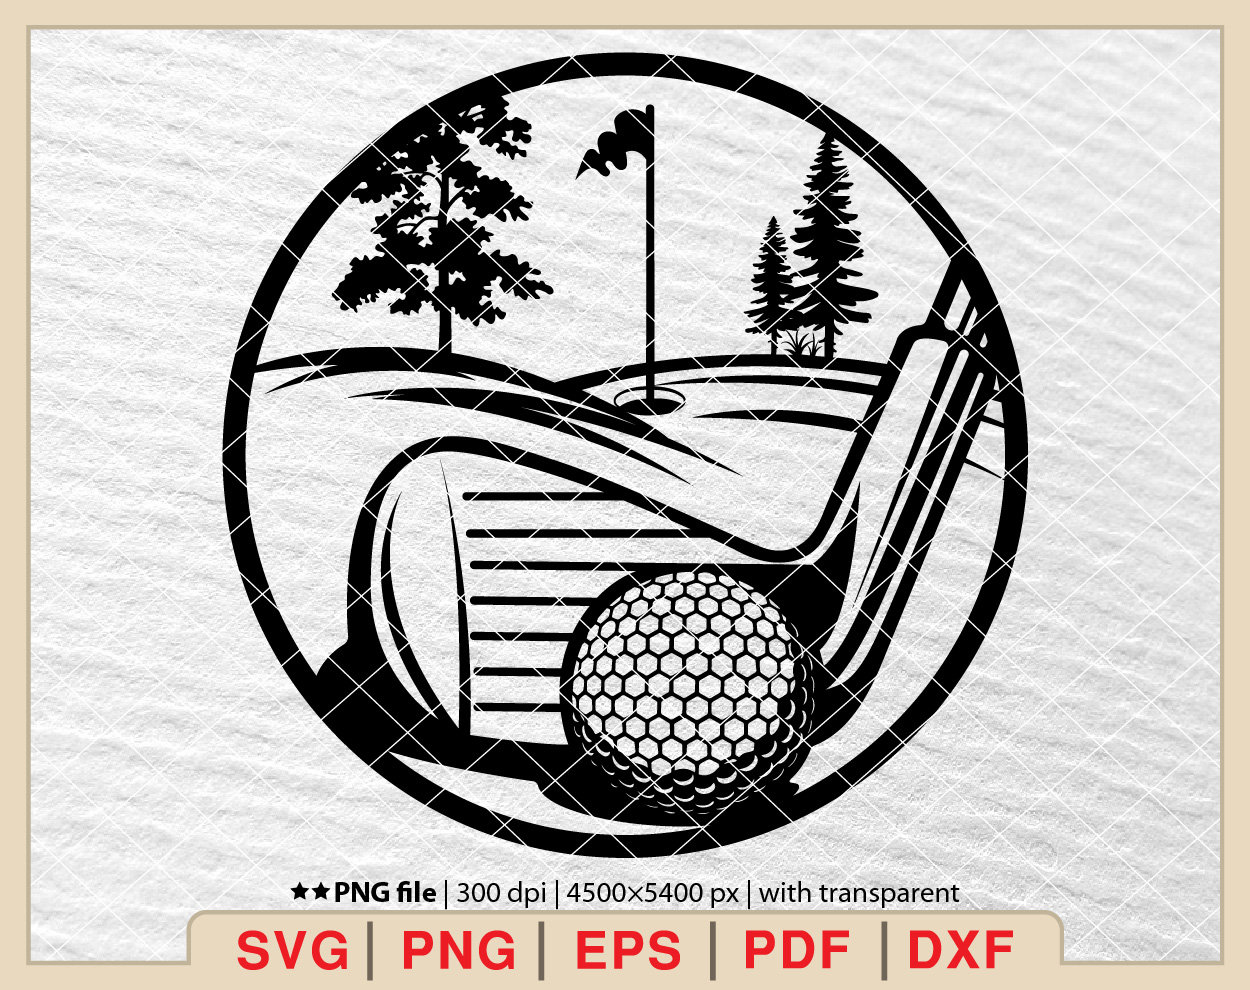 HM Logo PNG Transparent & SVG Vector - Freebie Supply